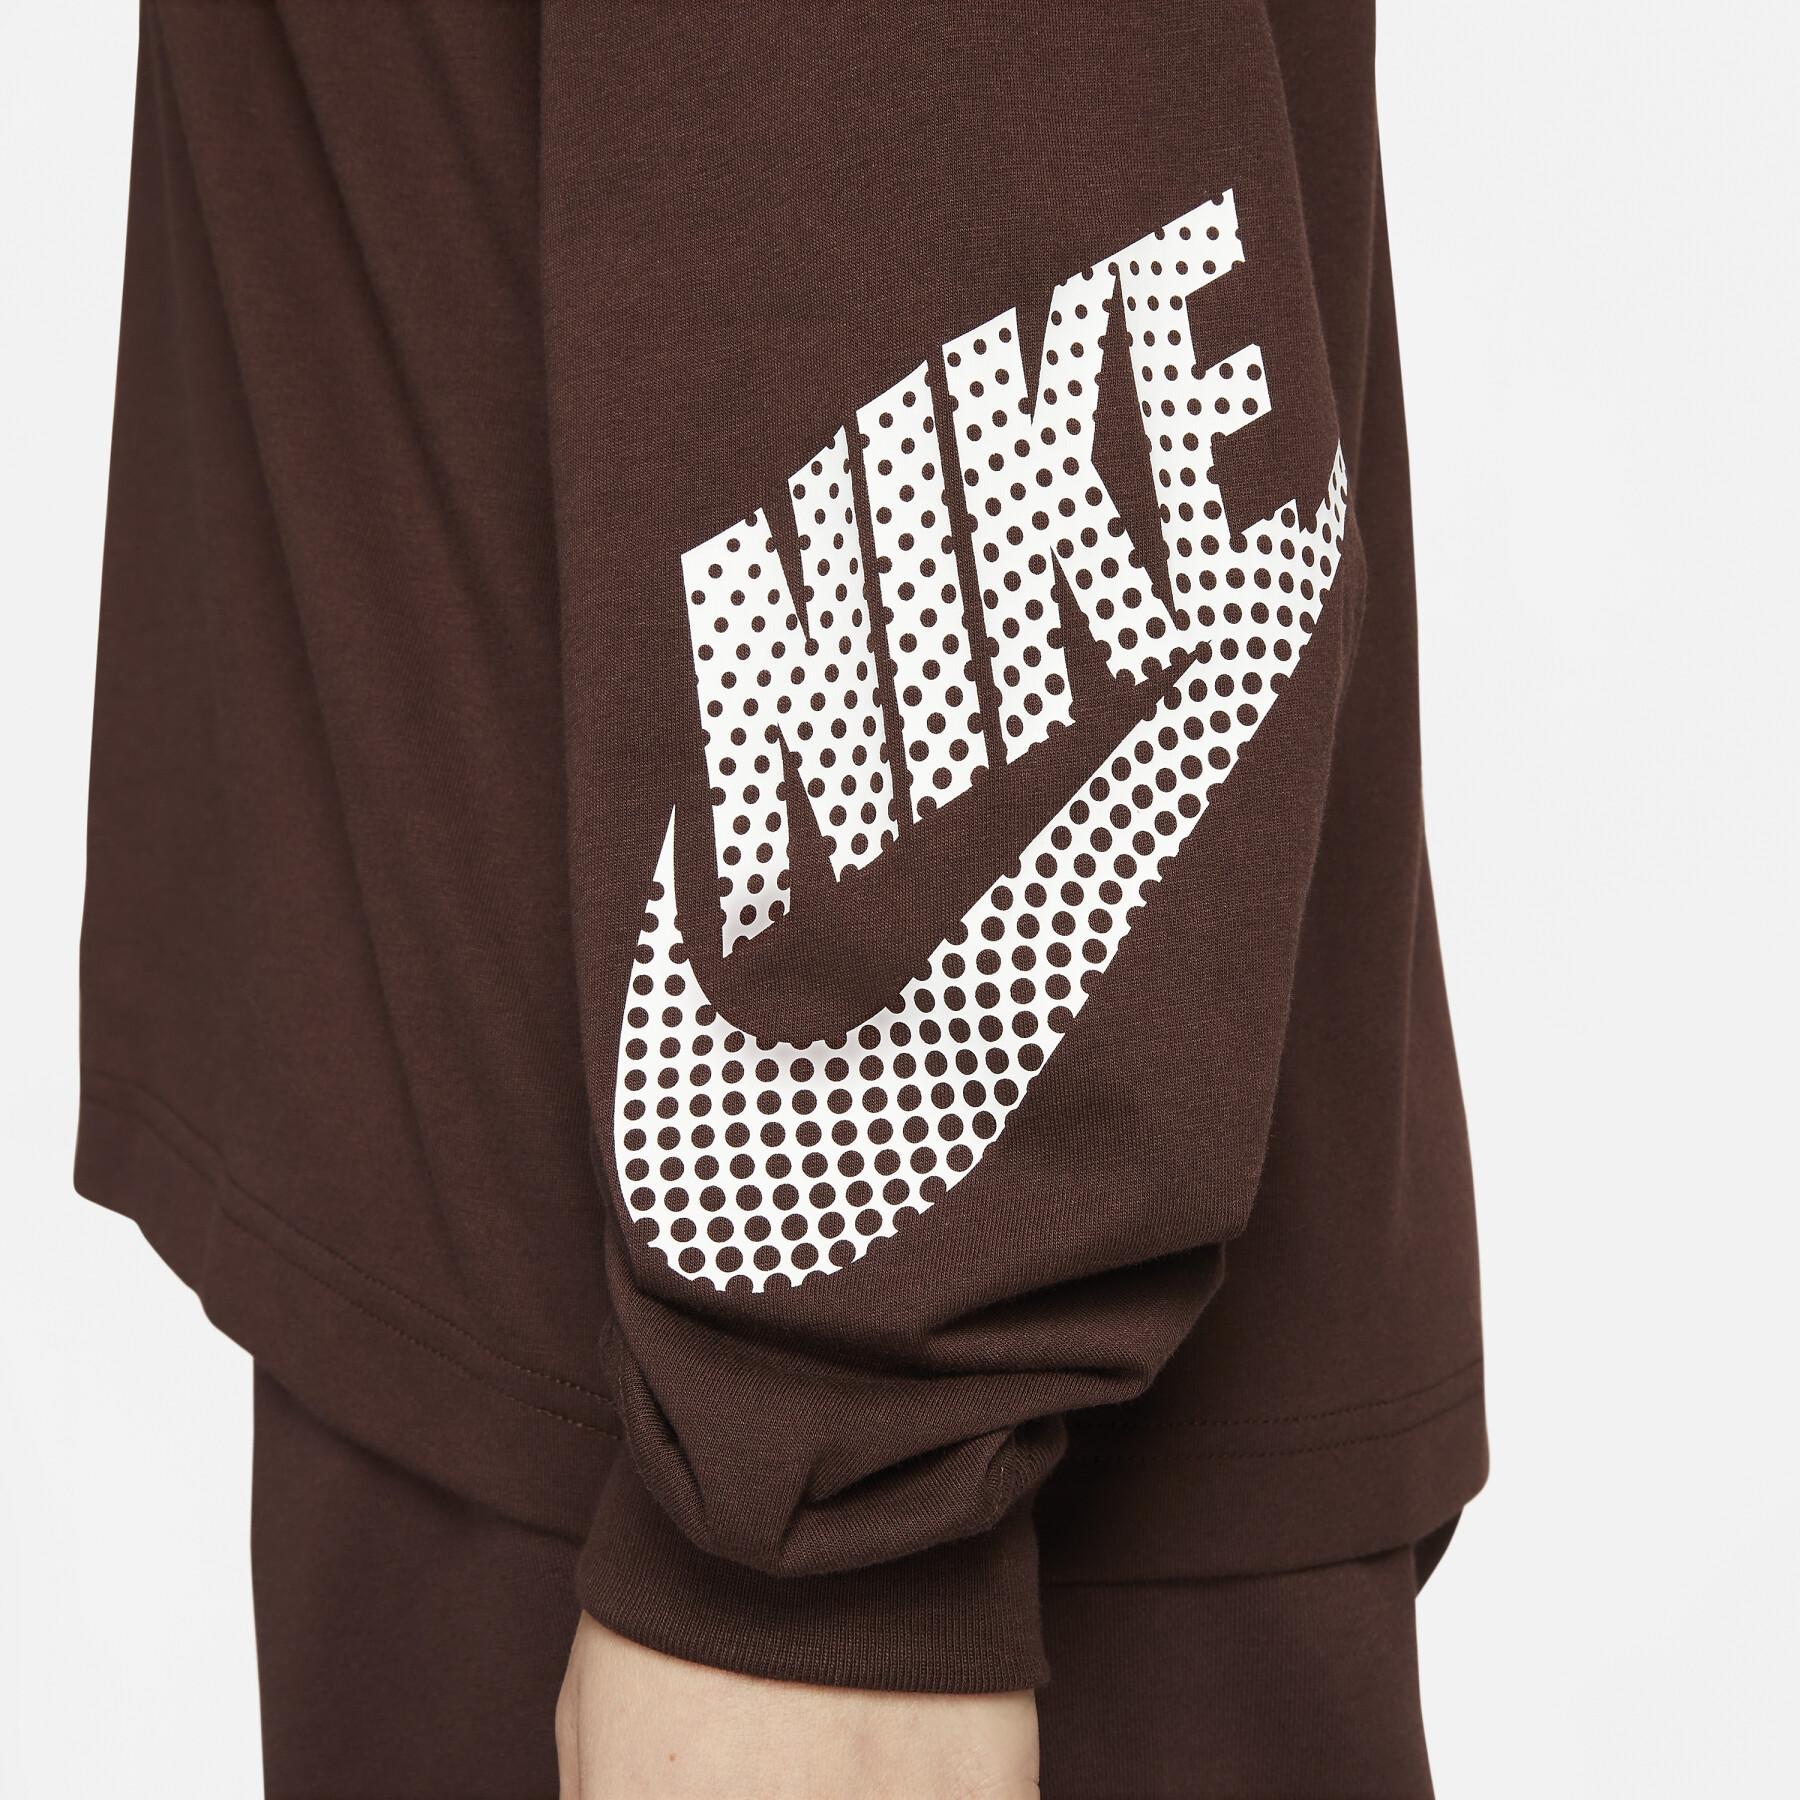 Damska koszulka z długim rękawem Nike GFX